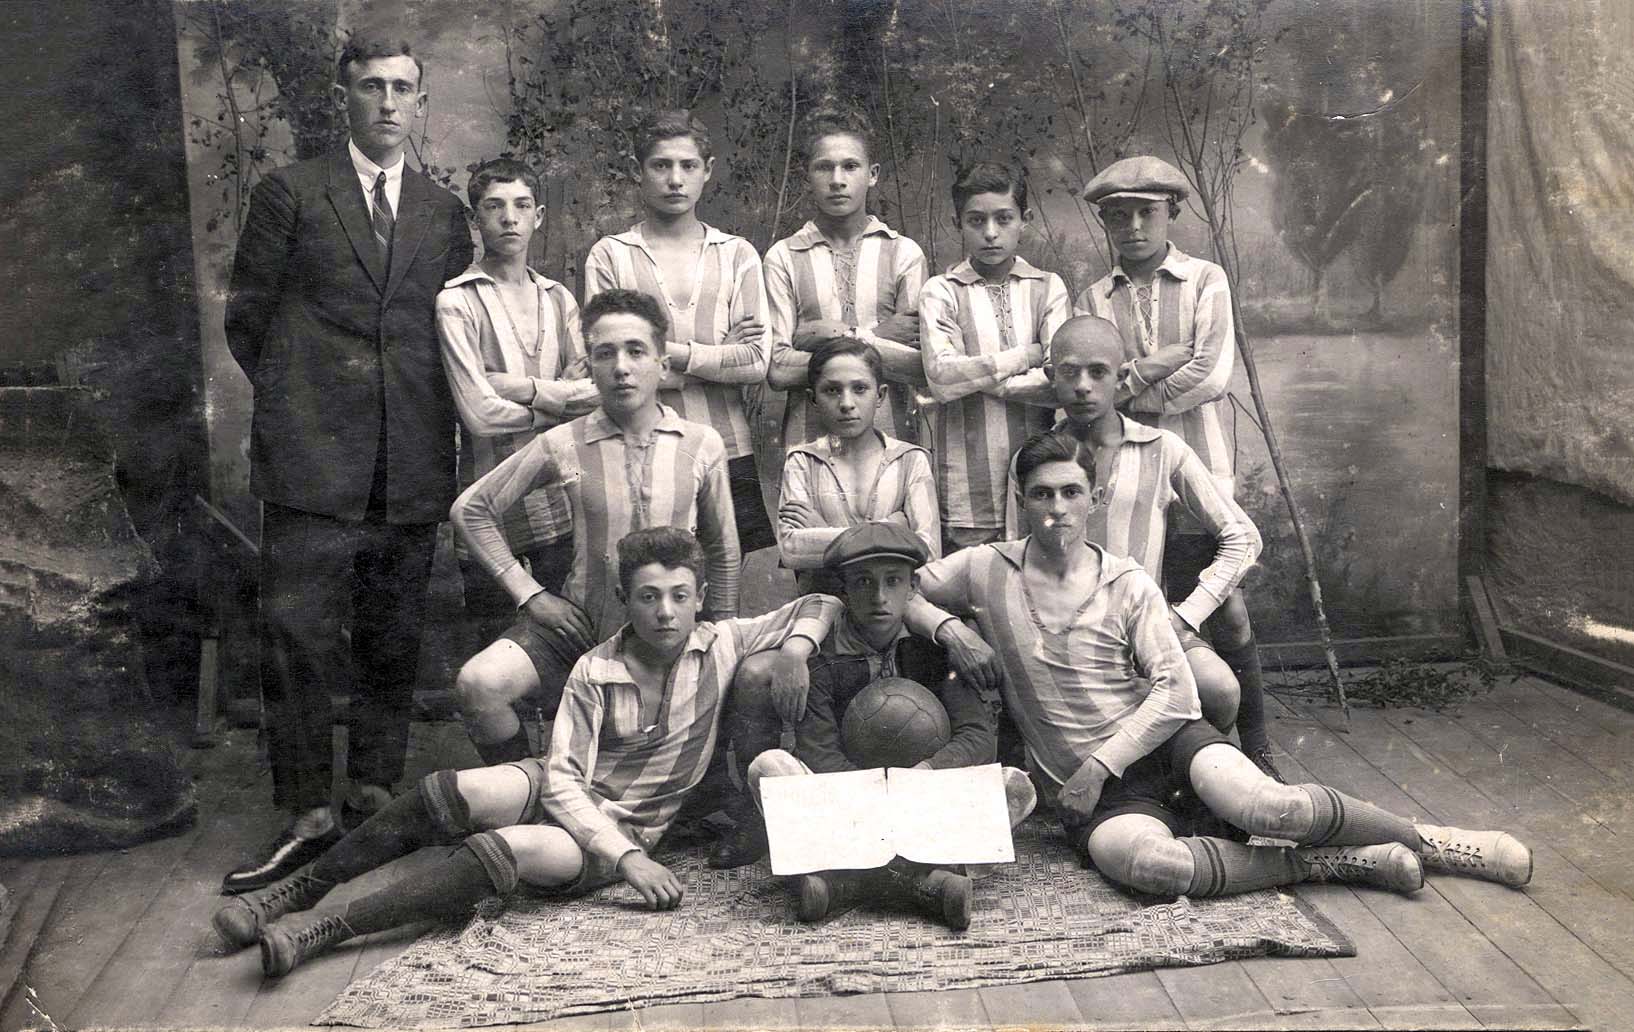 Pinsk, Poland, 2/10/1929, a Jewish football team